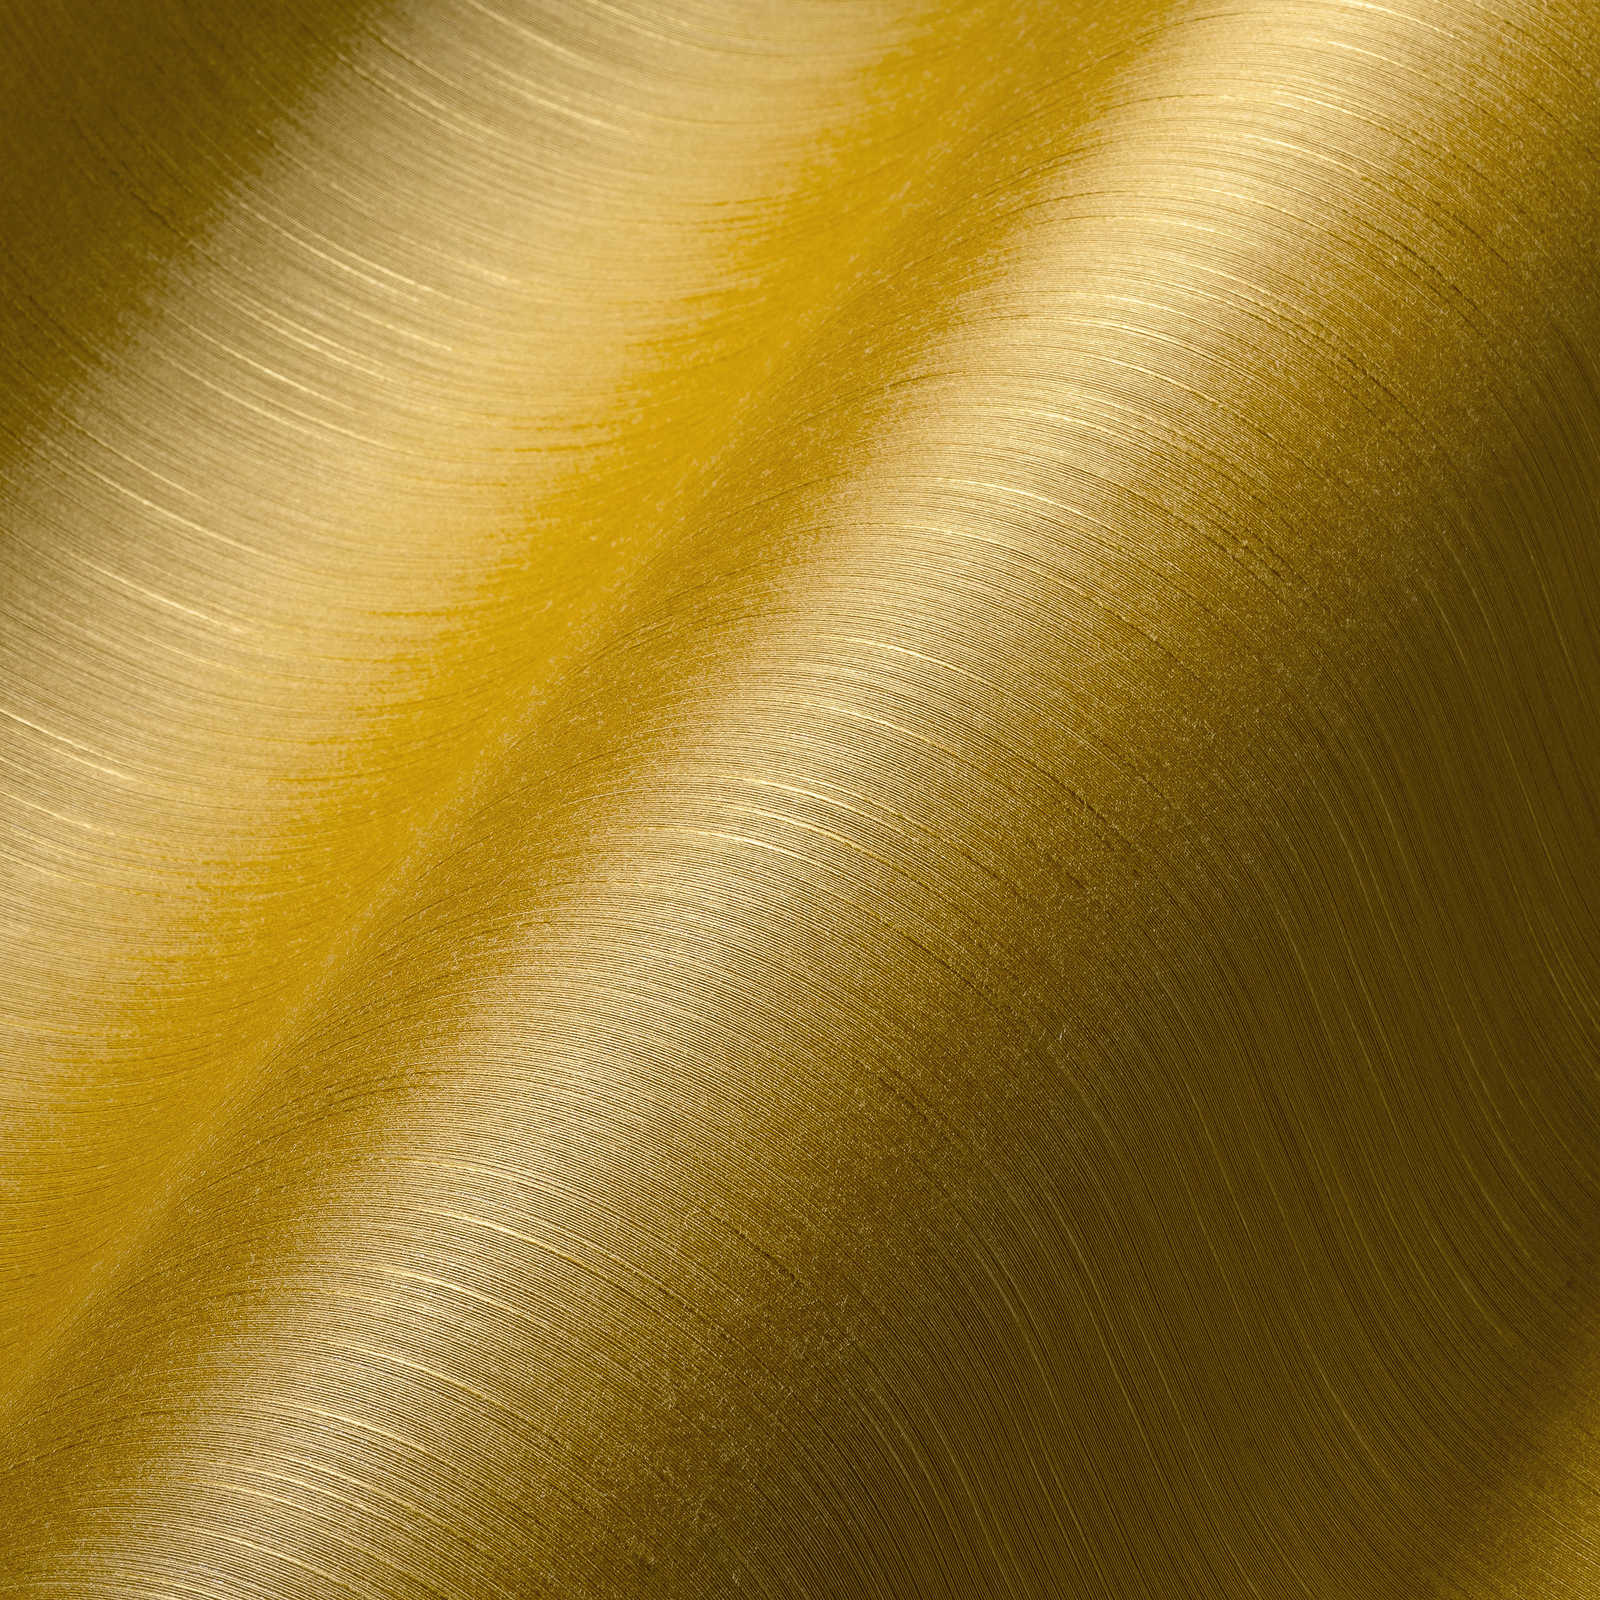             Papel pintado amarillo mostaza no tejido con motivos moteados - amarillo
        